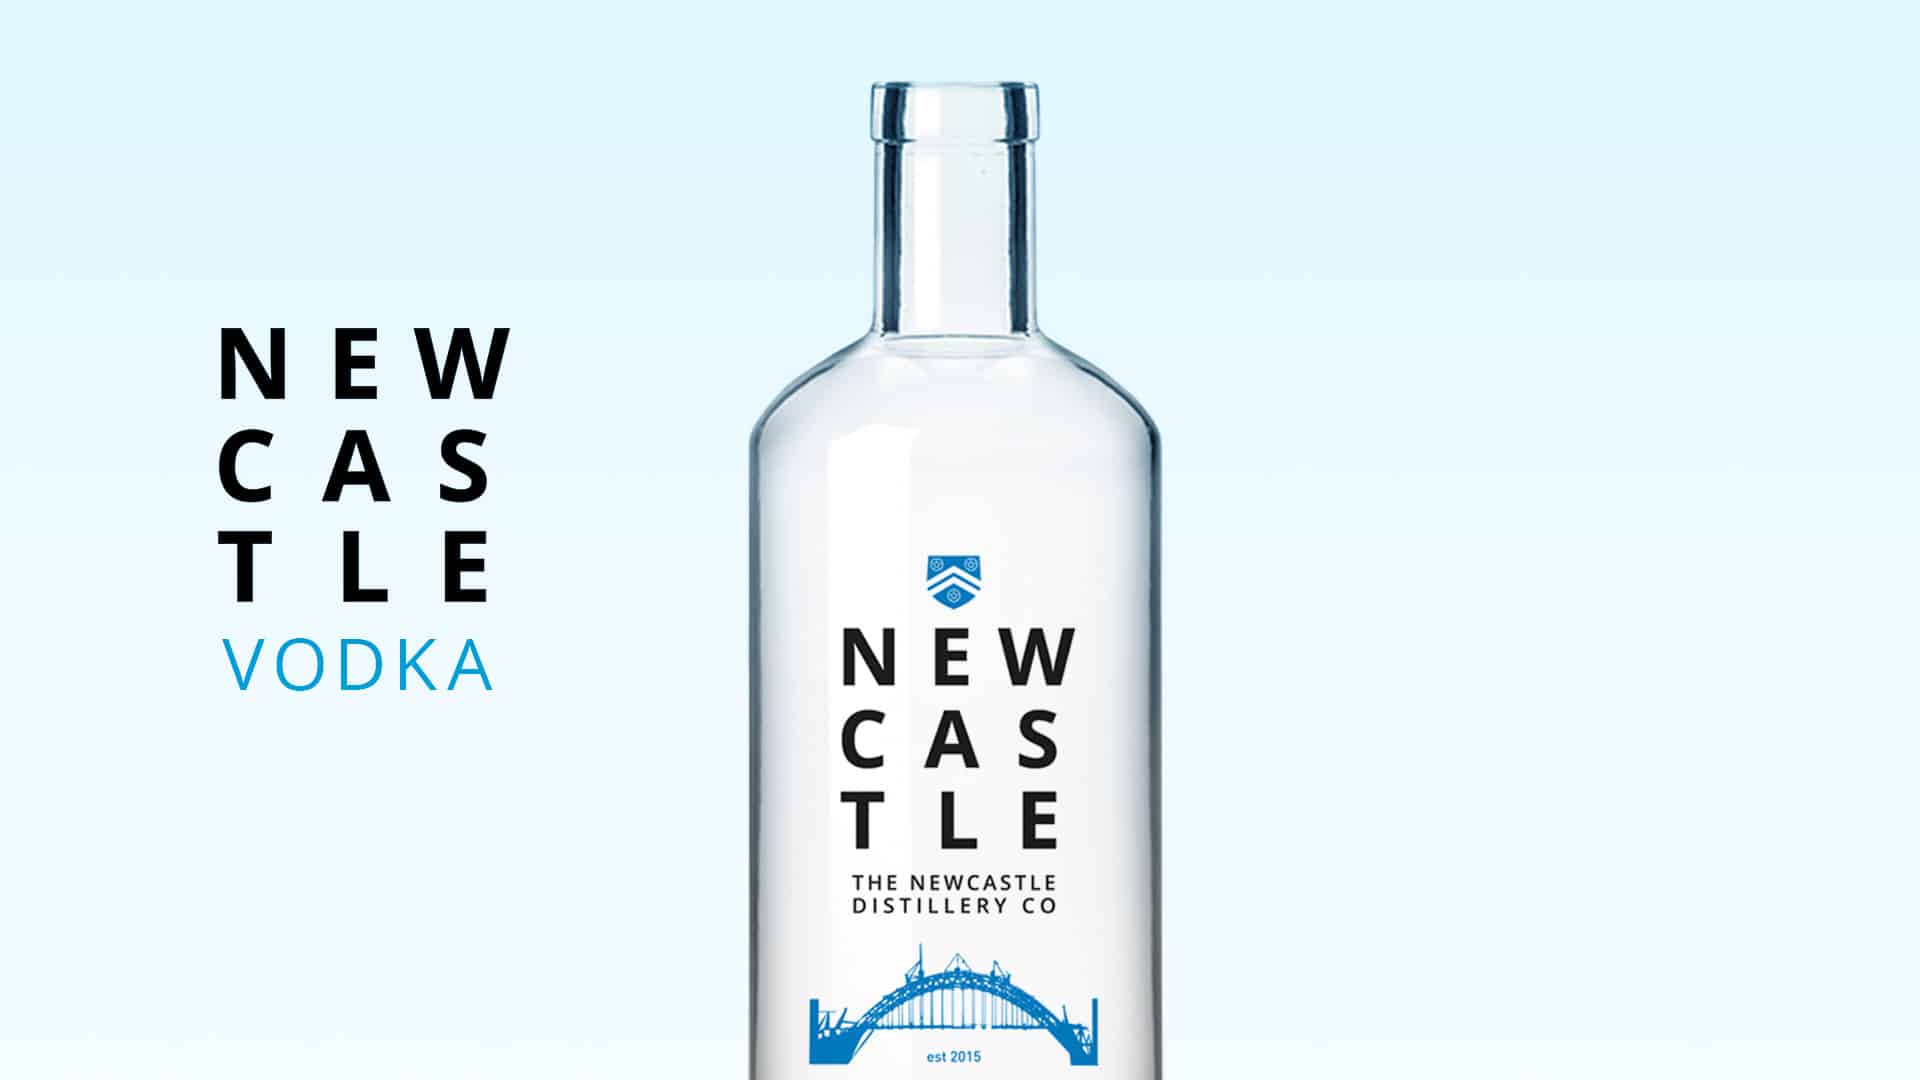 Newcastle Distillery Co - Vodka - Case Study